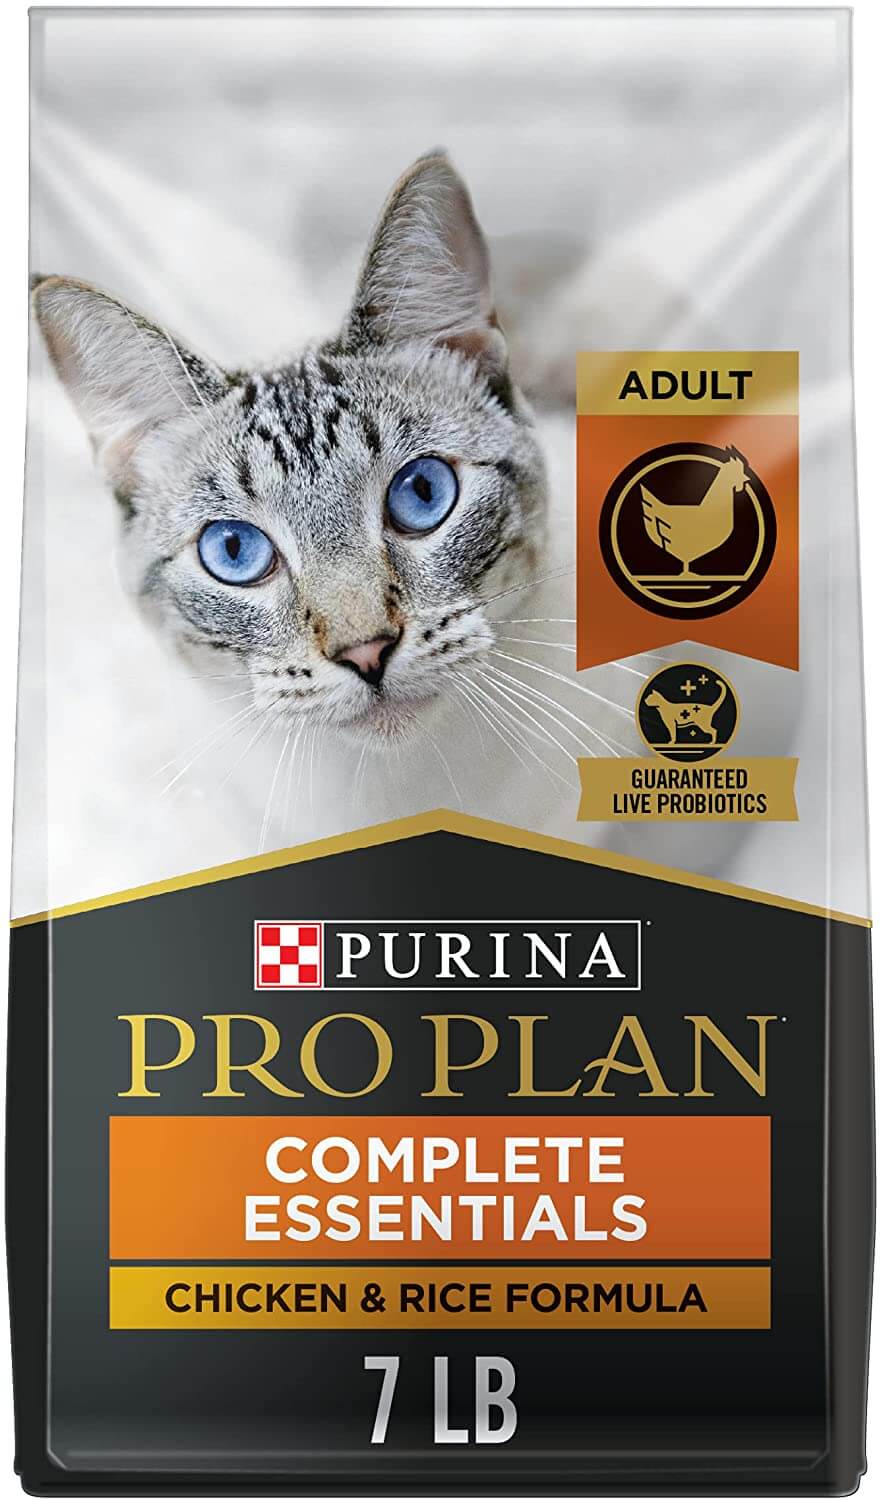 Purina Pro Plan Complete Essentials Adult Cat Food